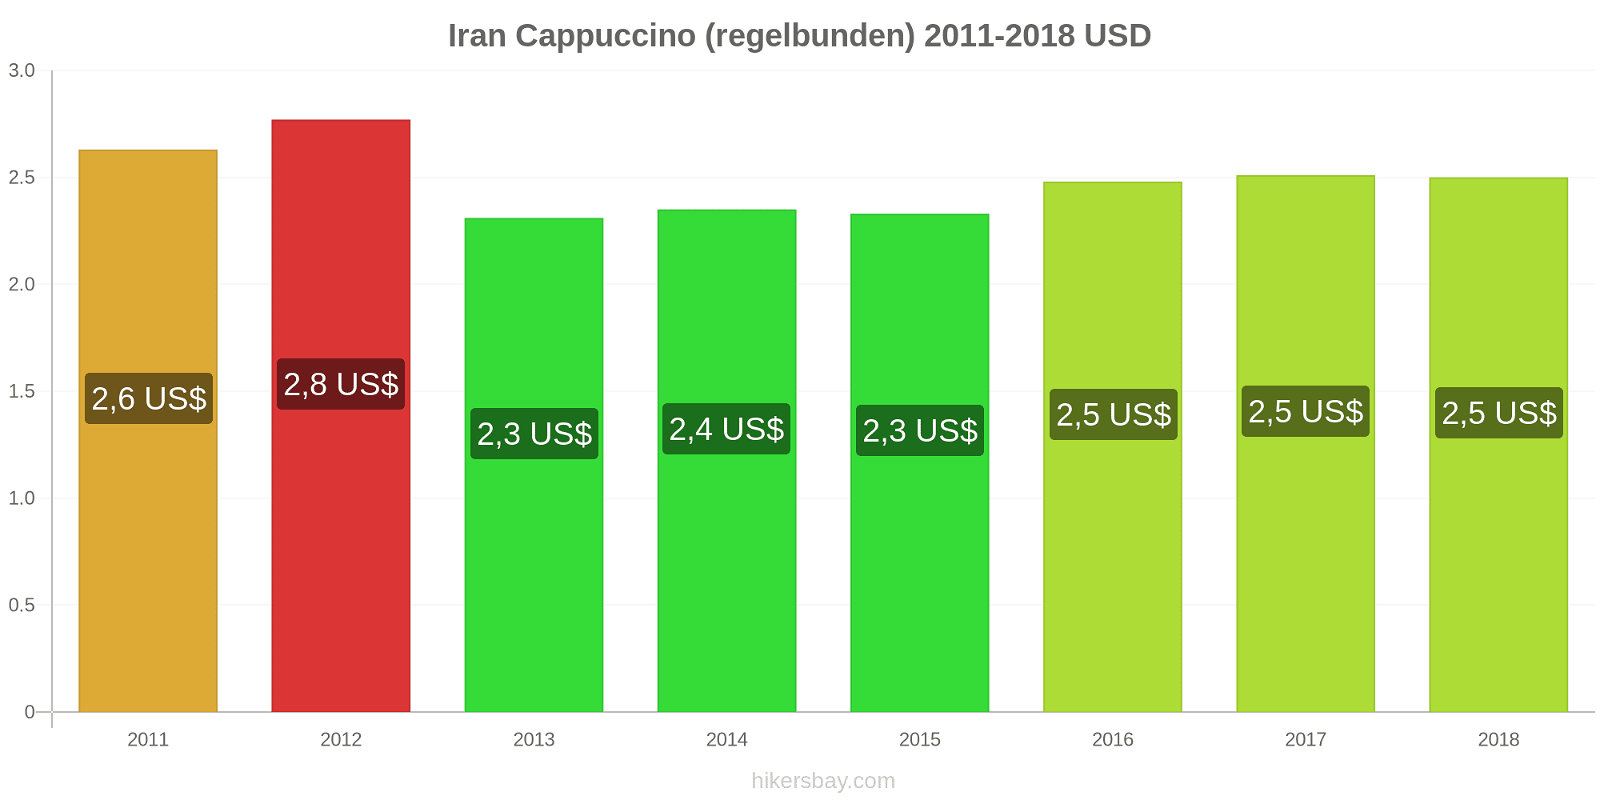 Iran prisändringar Cappuccino hikersbay.com